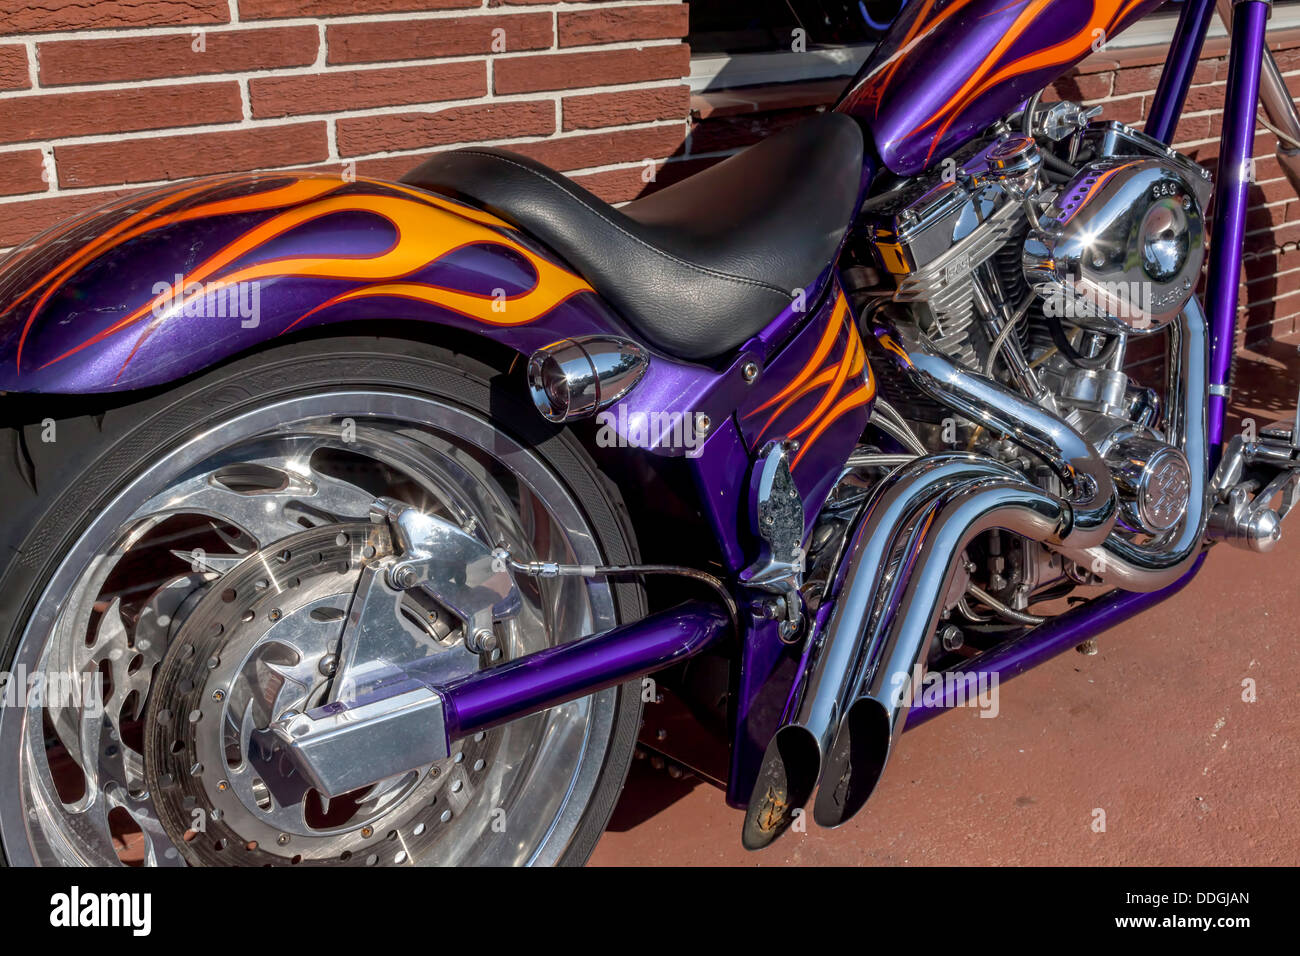 Custom orange and purple flame job paintwork on chopper motorcycle. Stock Photo